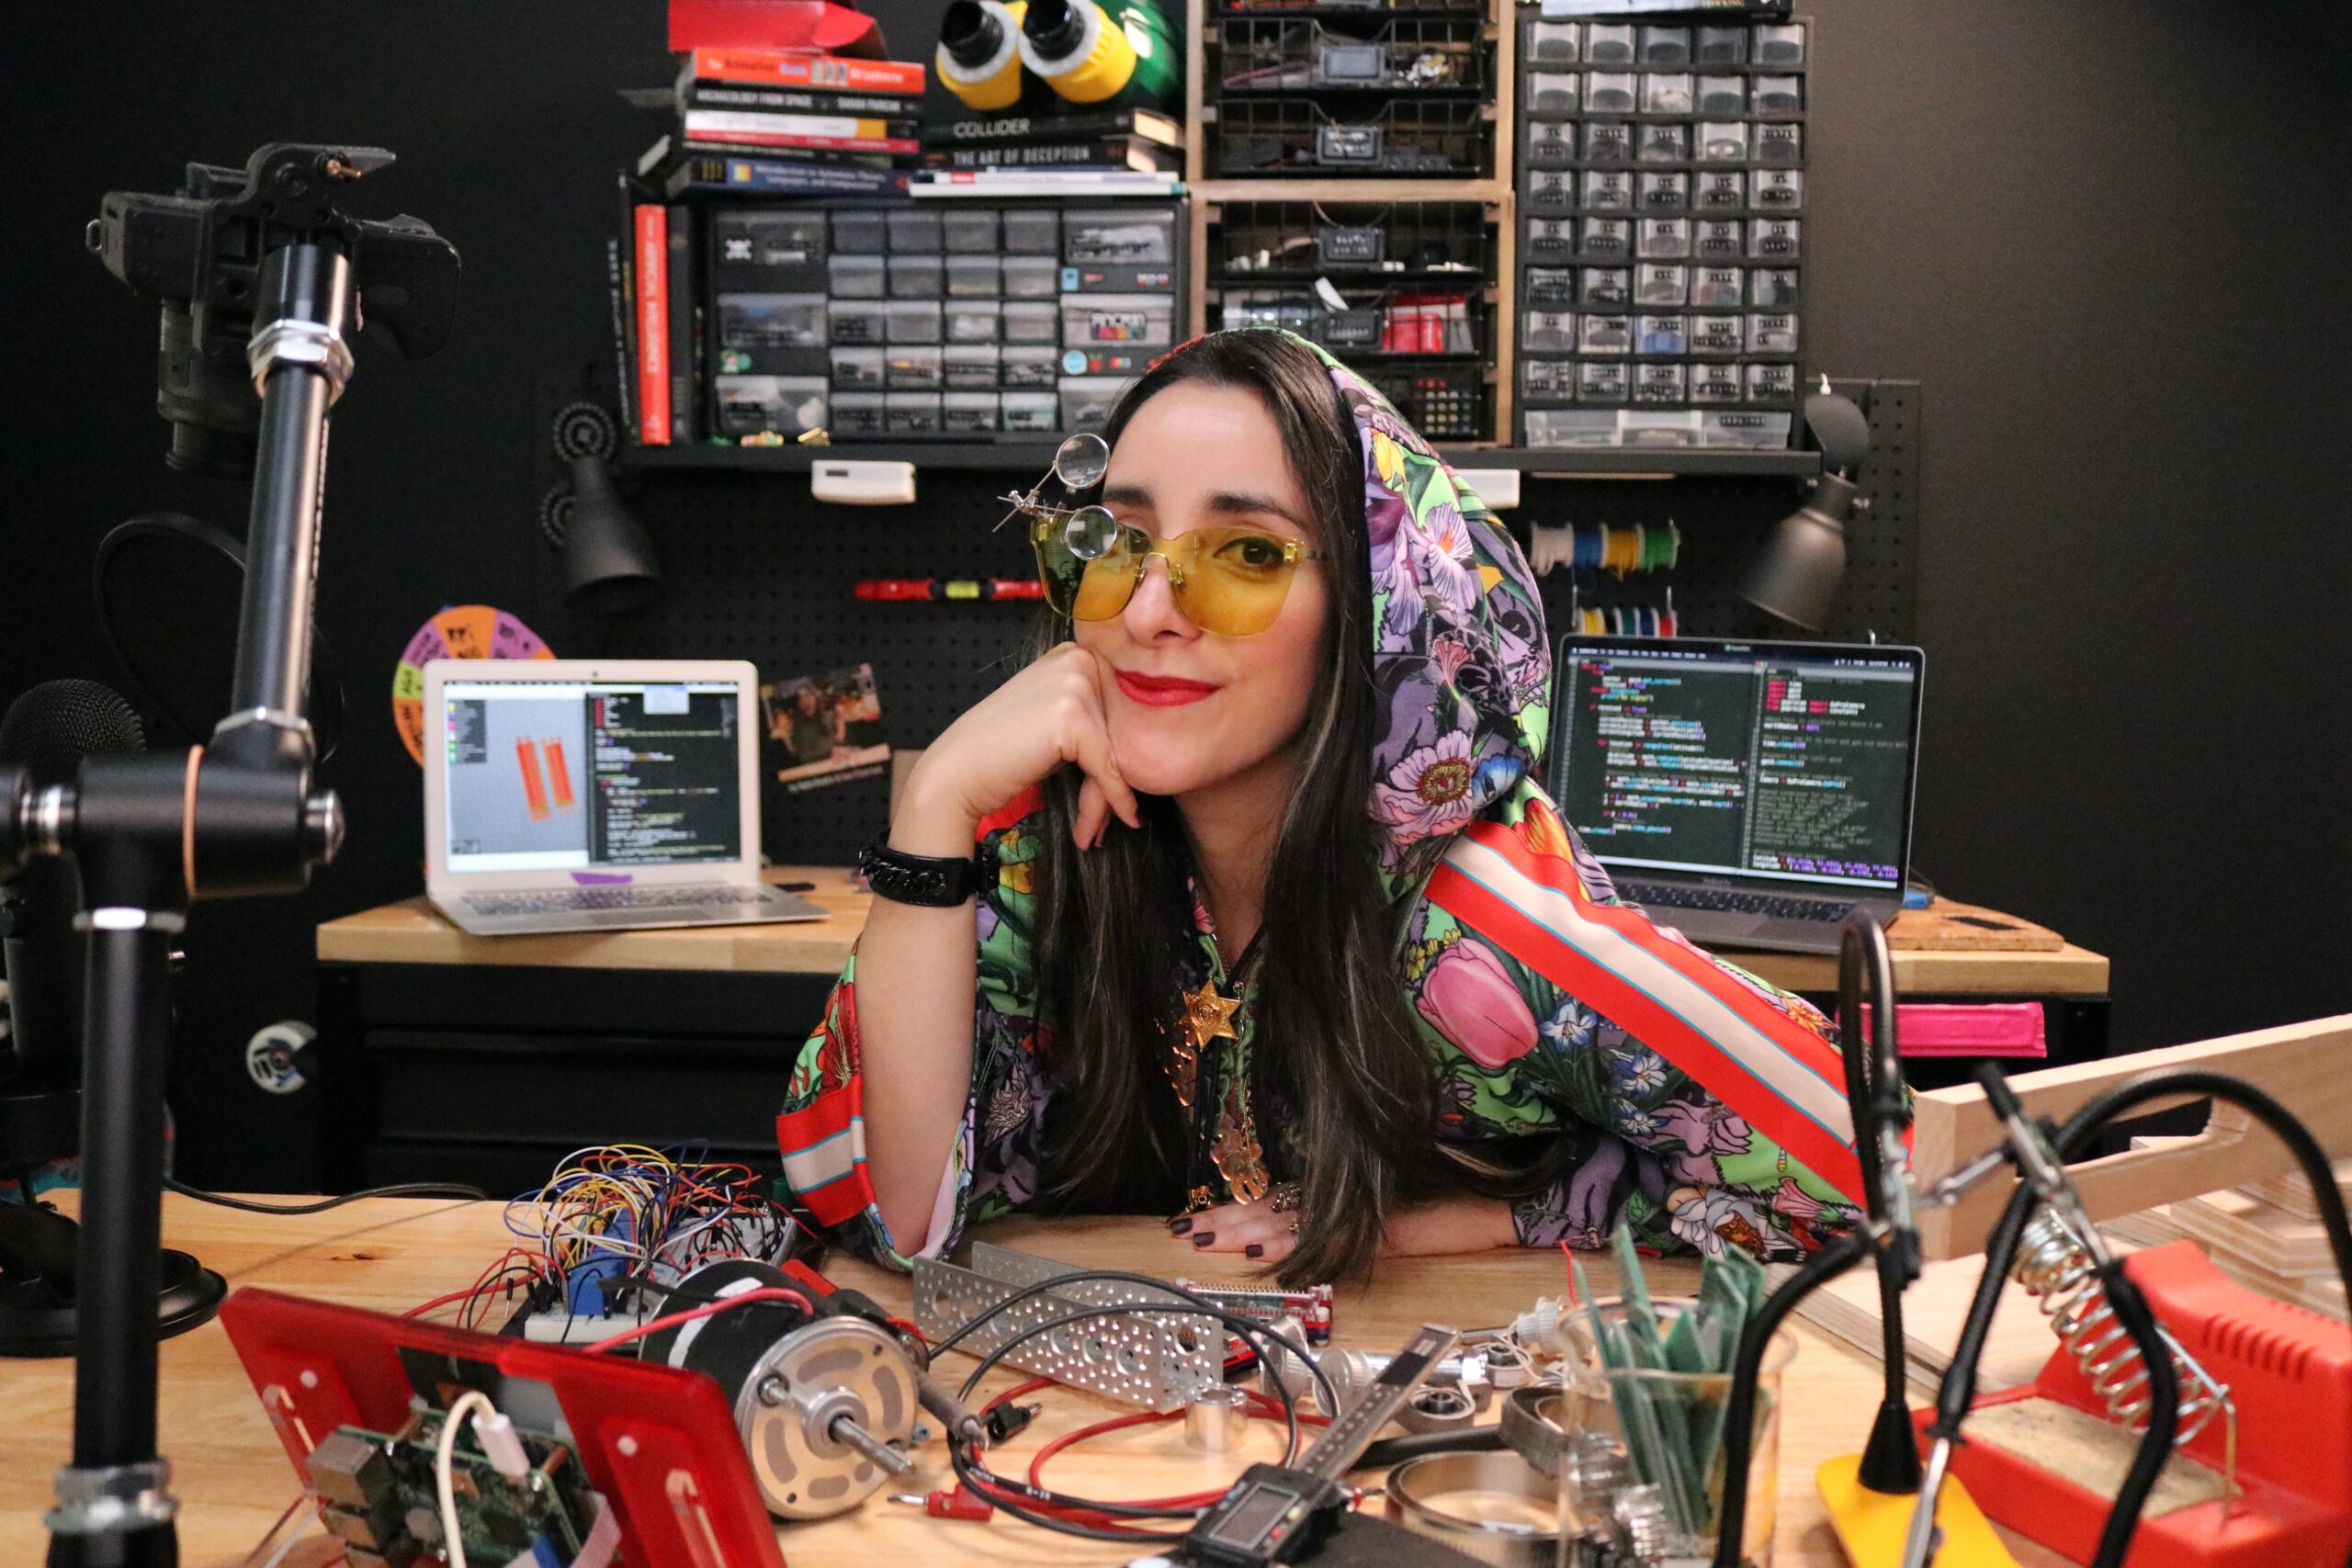 estefannie at her desk in colourful hoodie